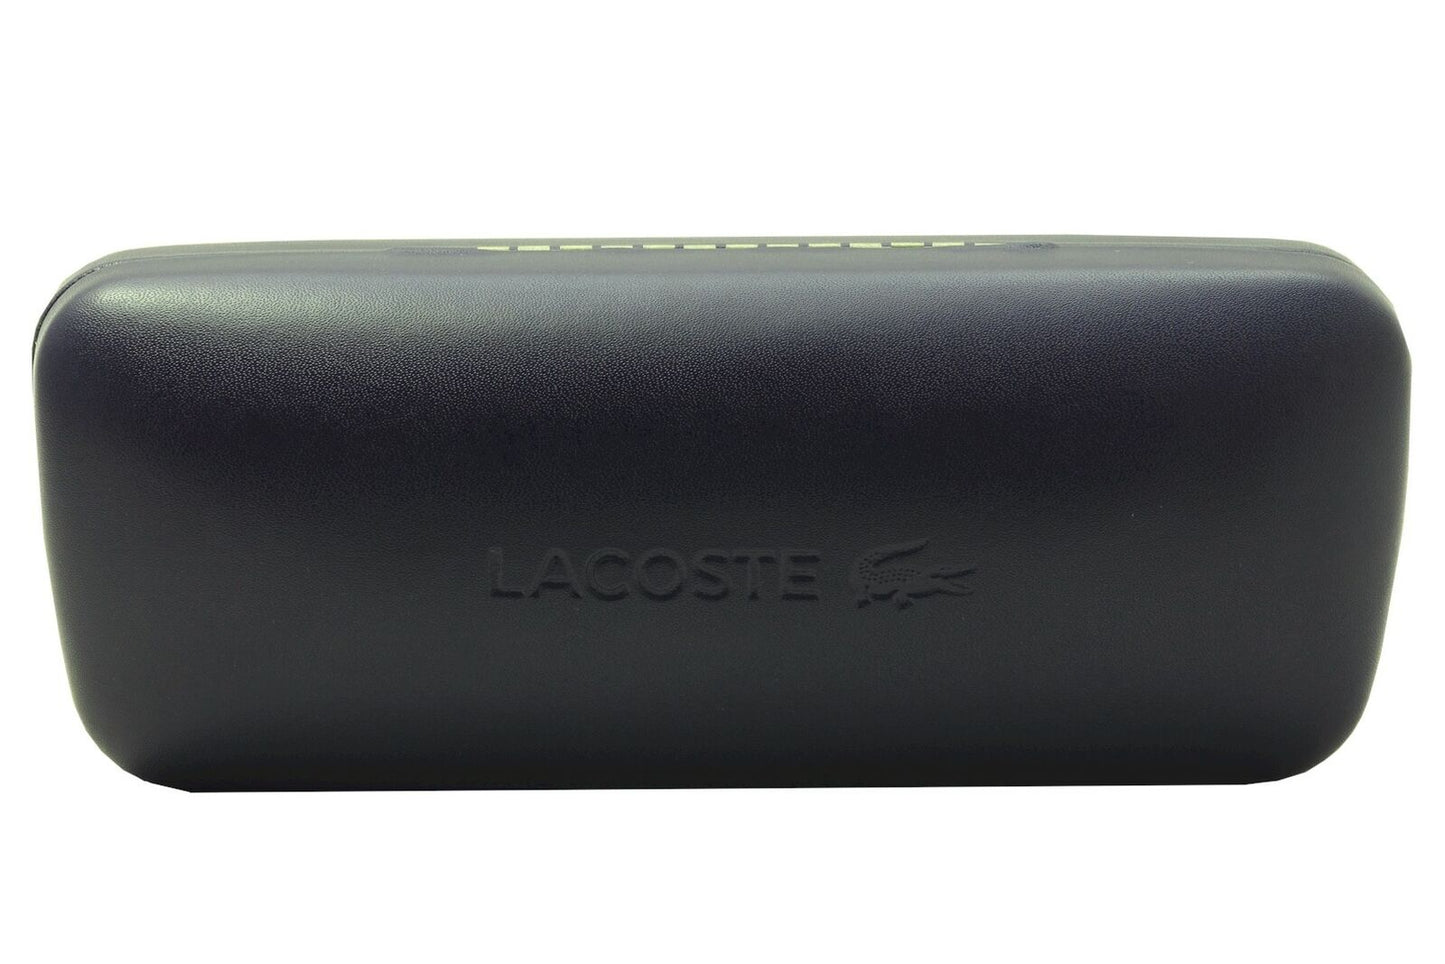 Lacoste L2217-210 52mm New Eyeglasses